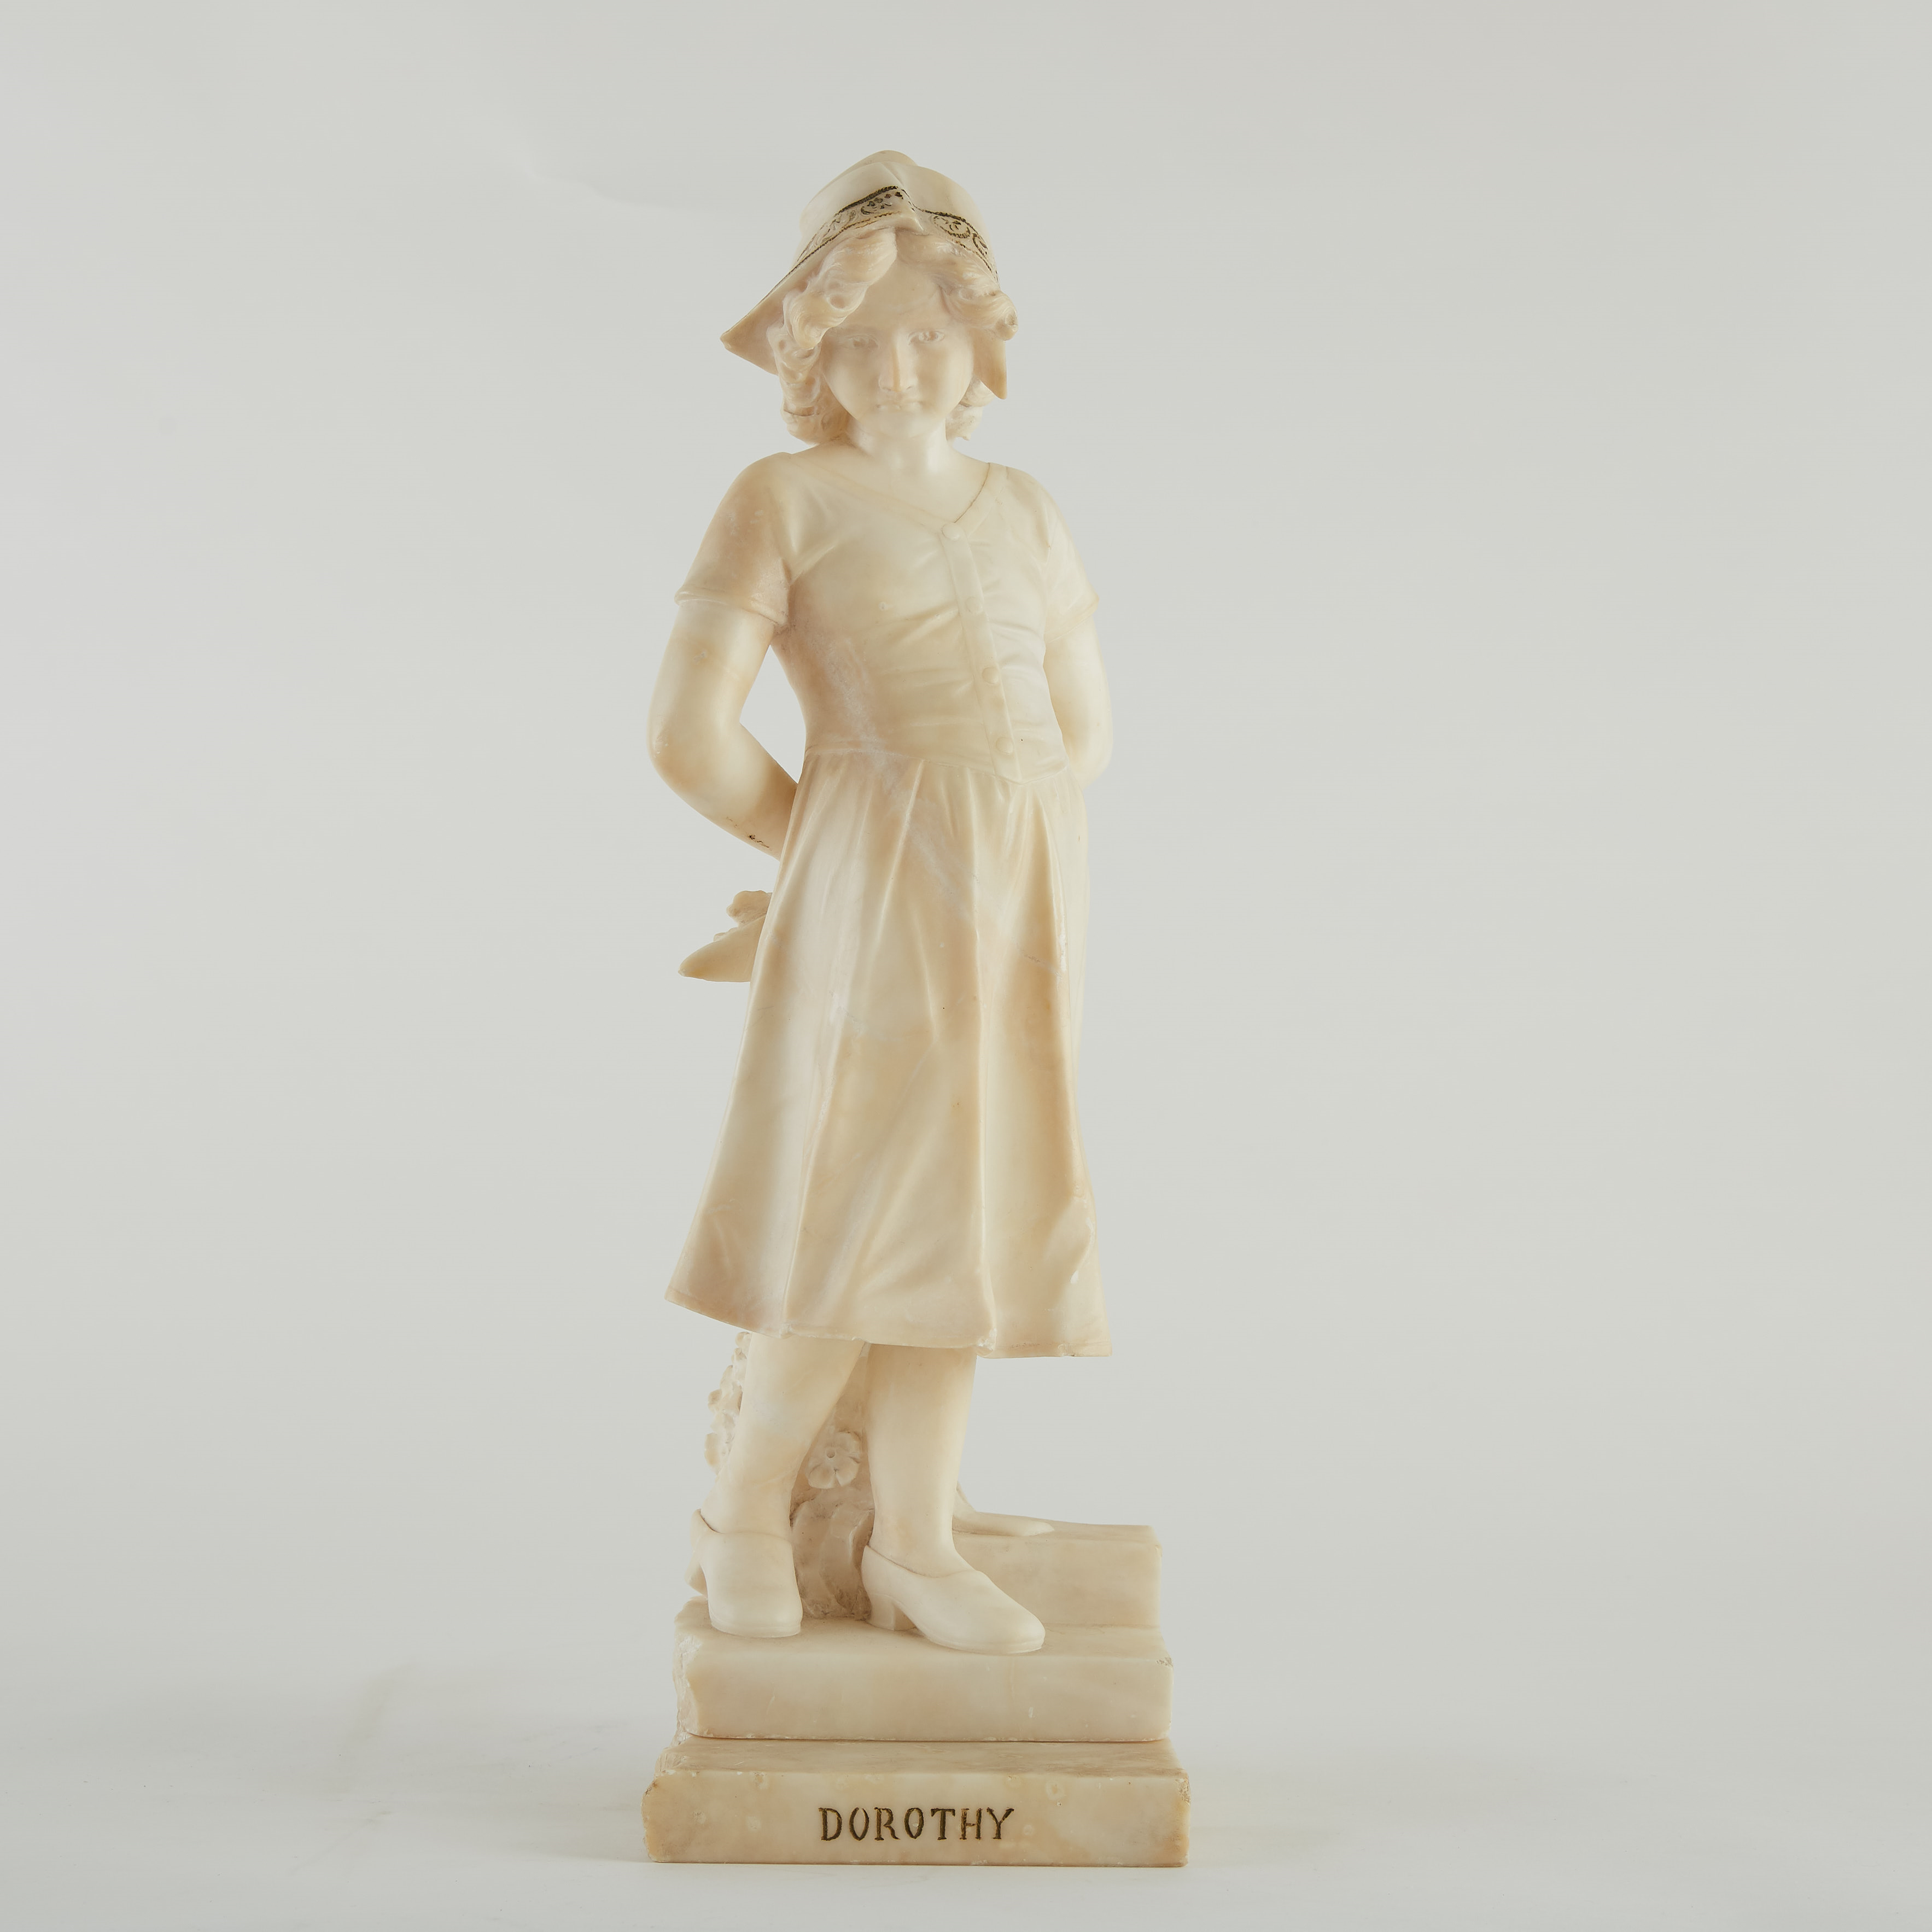 Lot 034: Barranti "Dorothy" Marble Sculpture